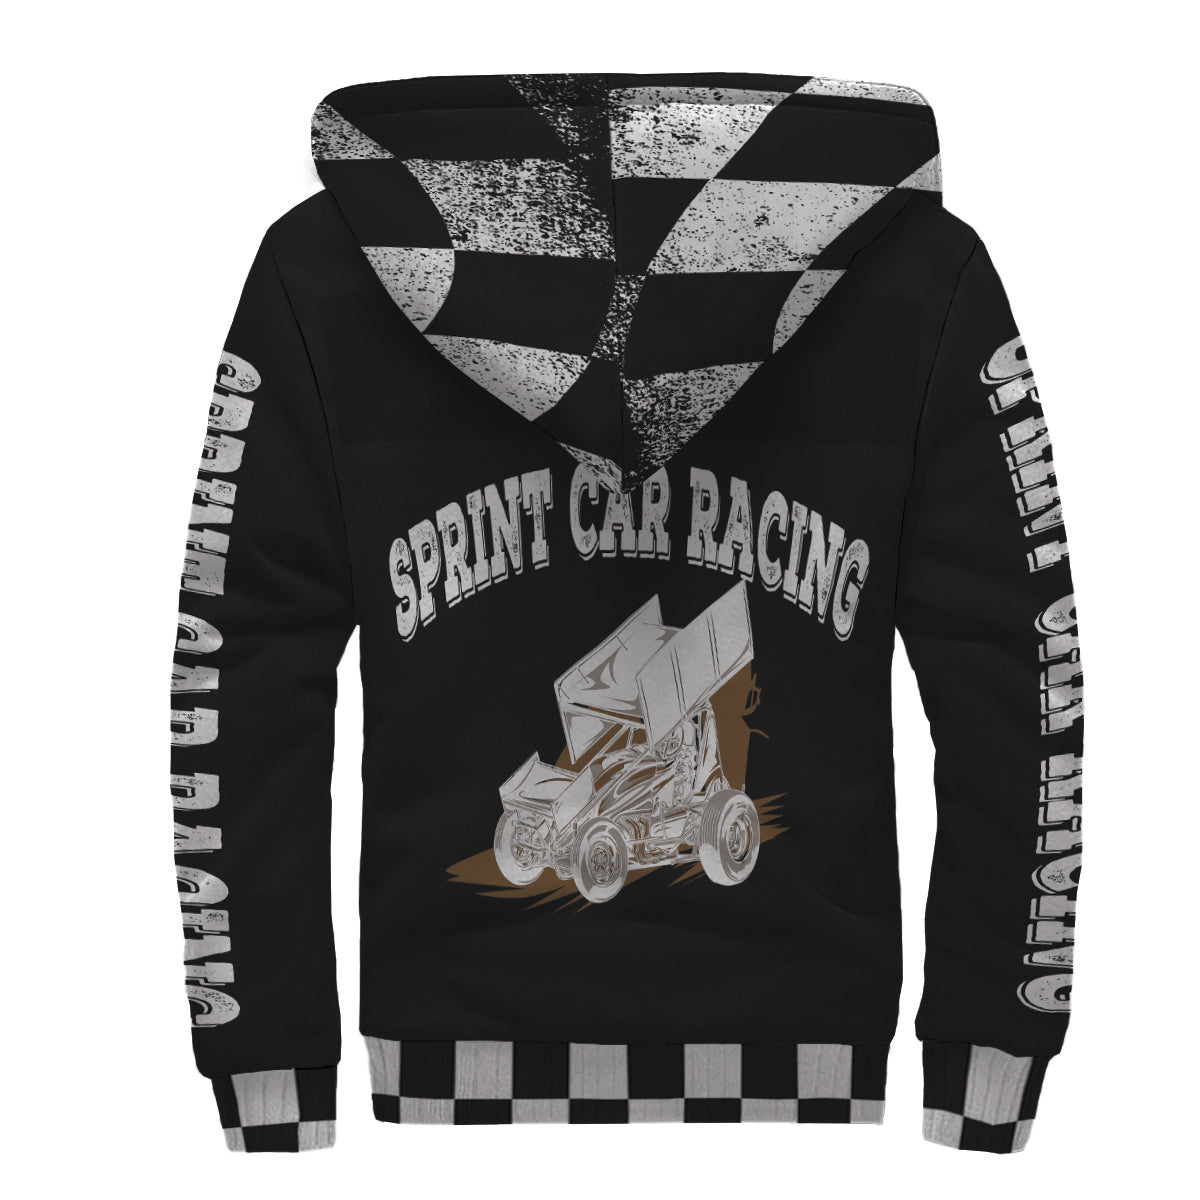 Sprint Car Racing Sherpa Jacket